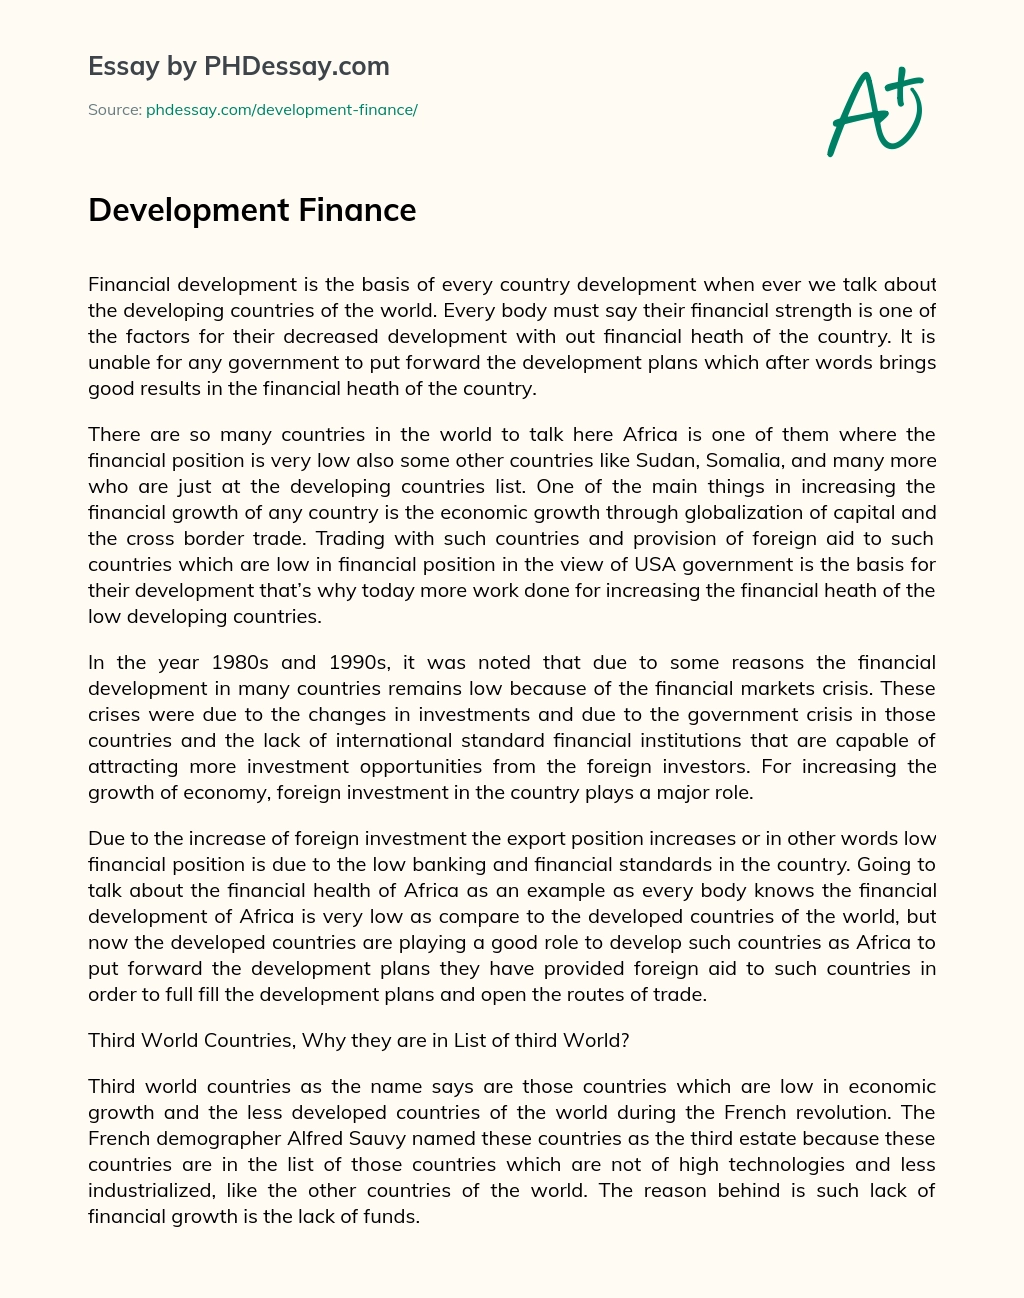 Development Finance essay